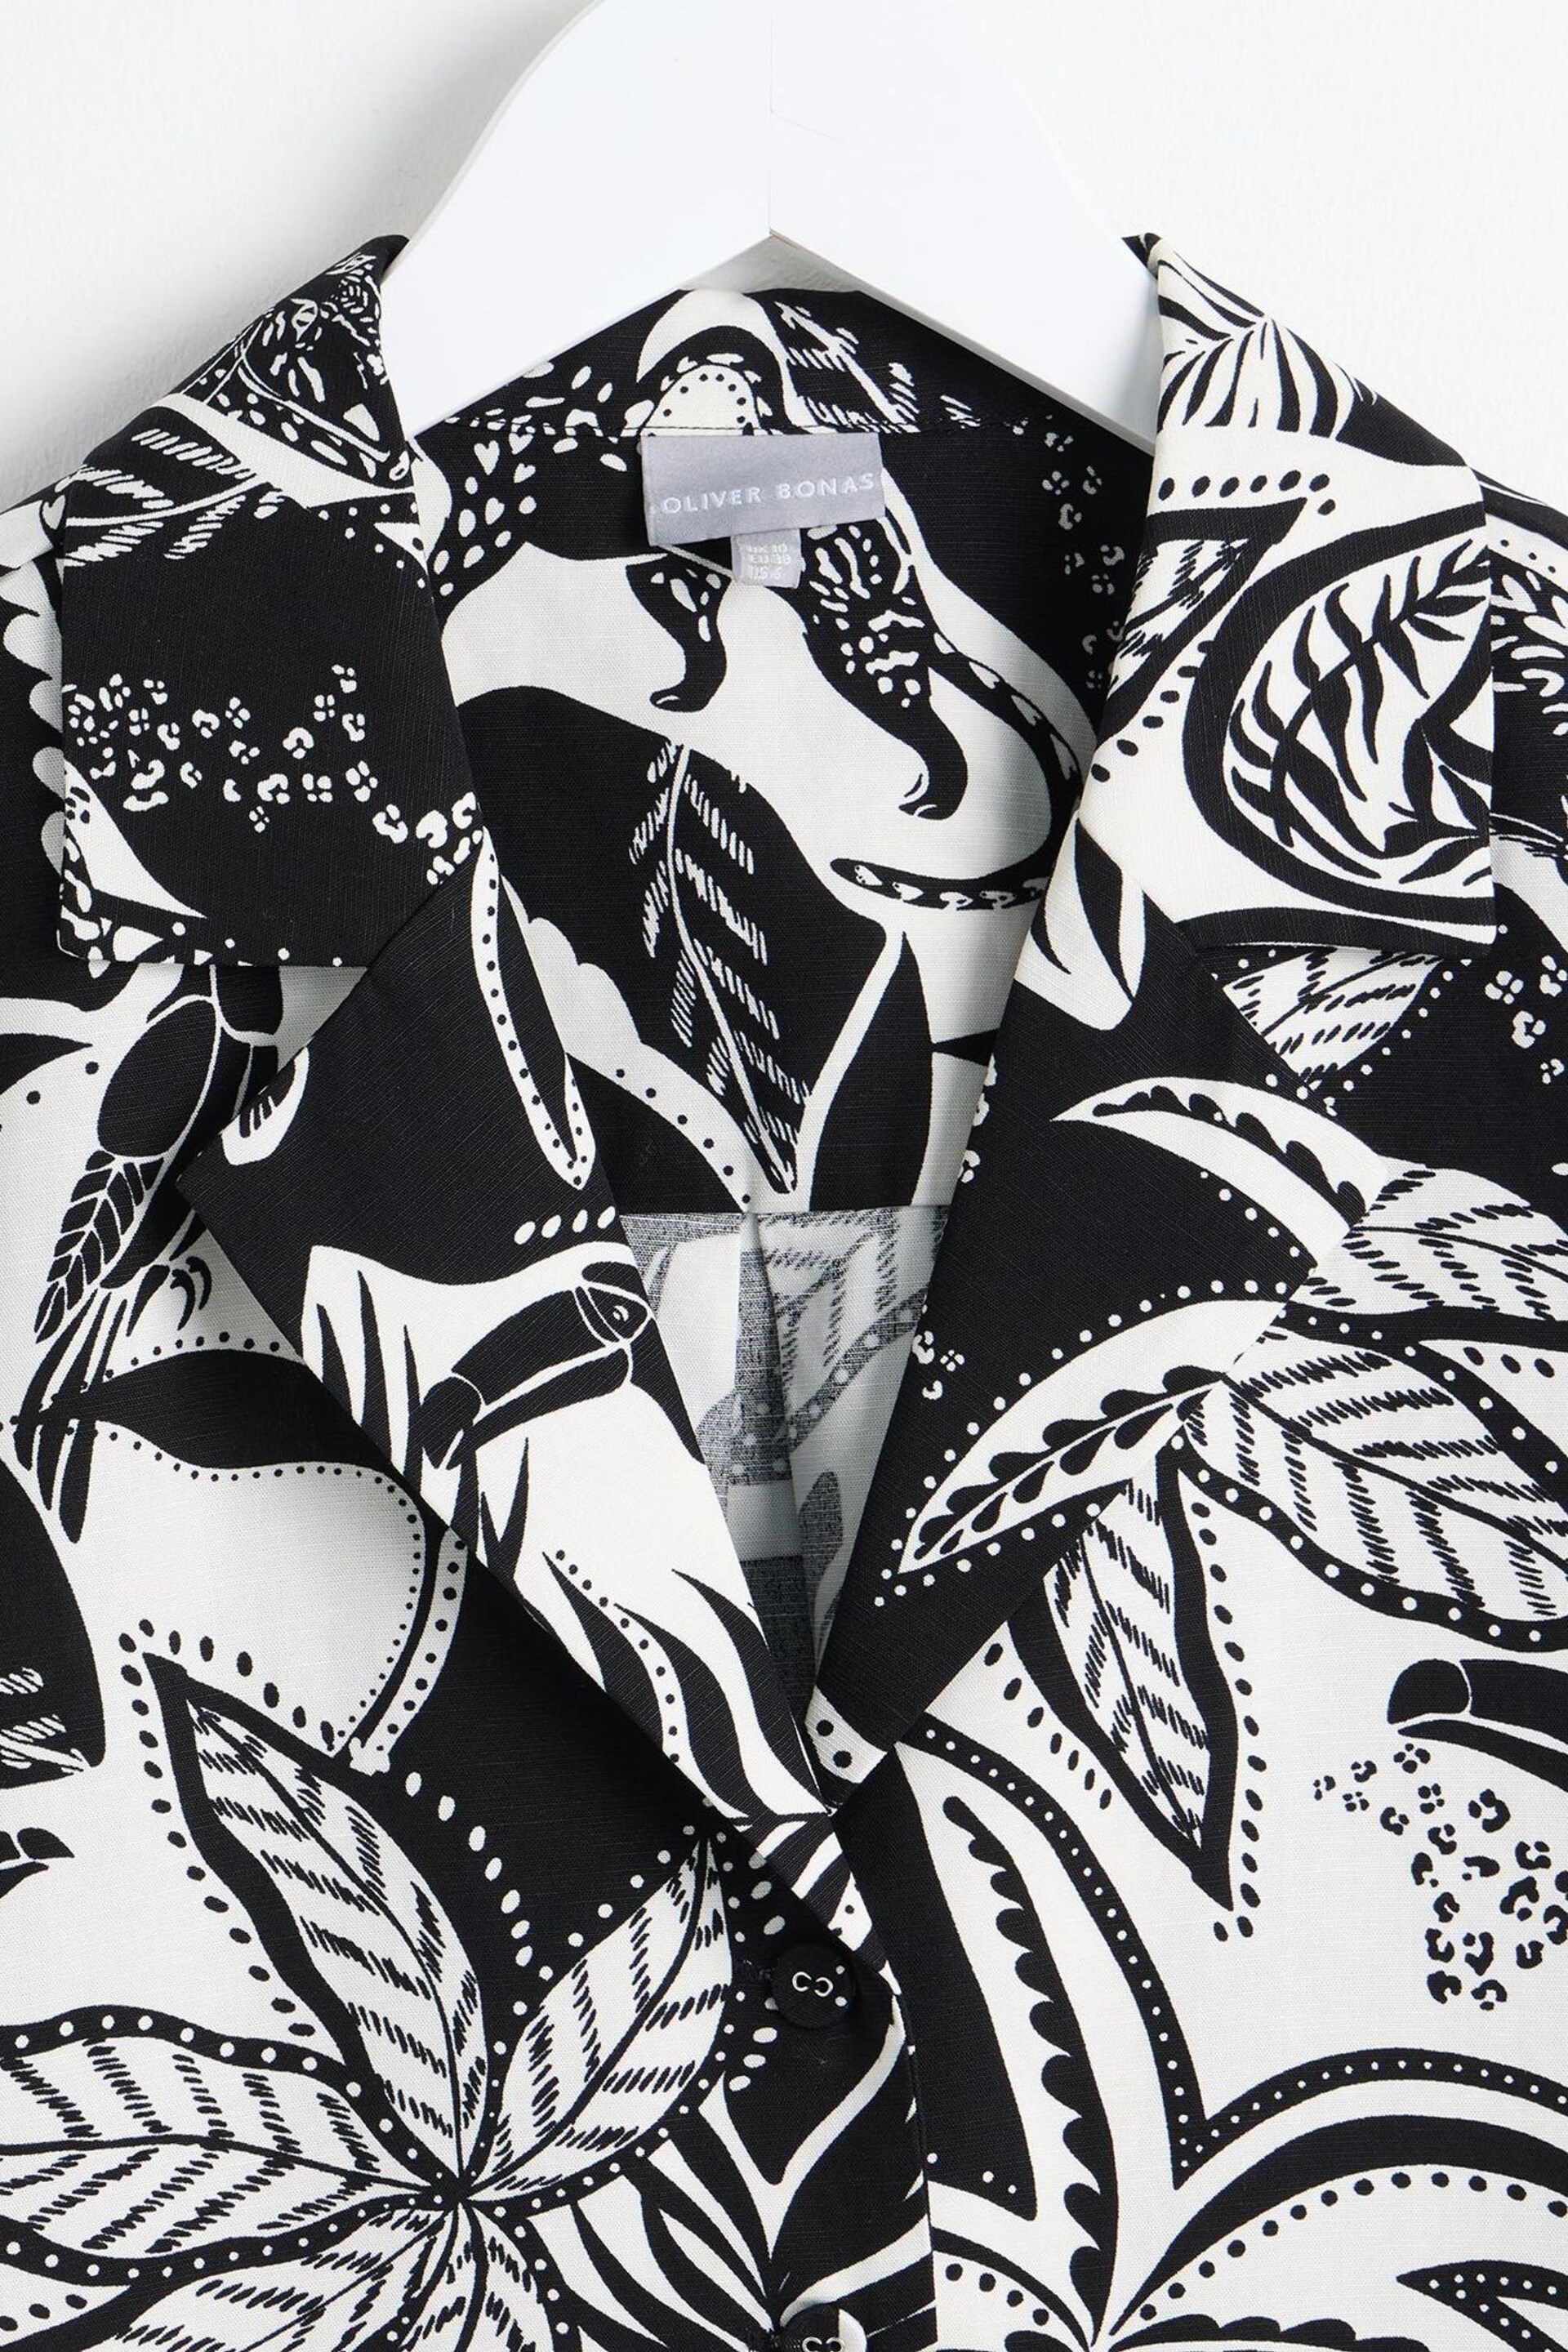 Oliver Bonas Tropical Print Black Shirt - Image 3 of 5